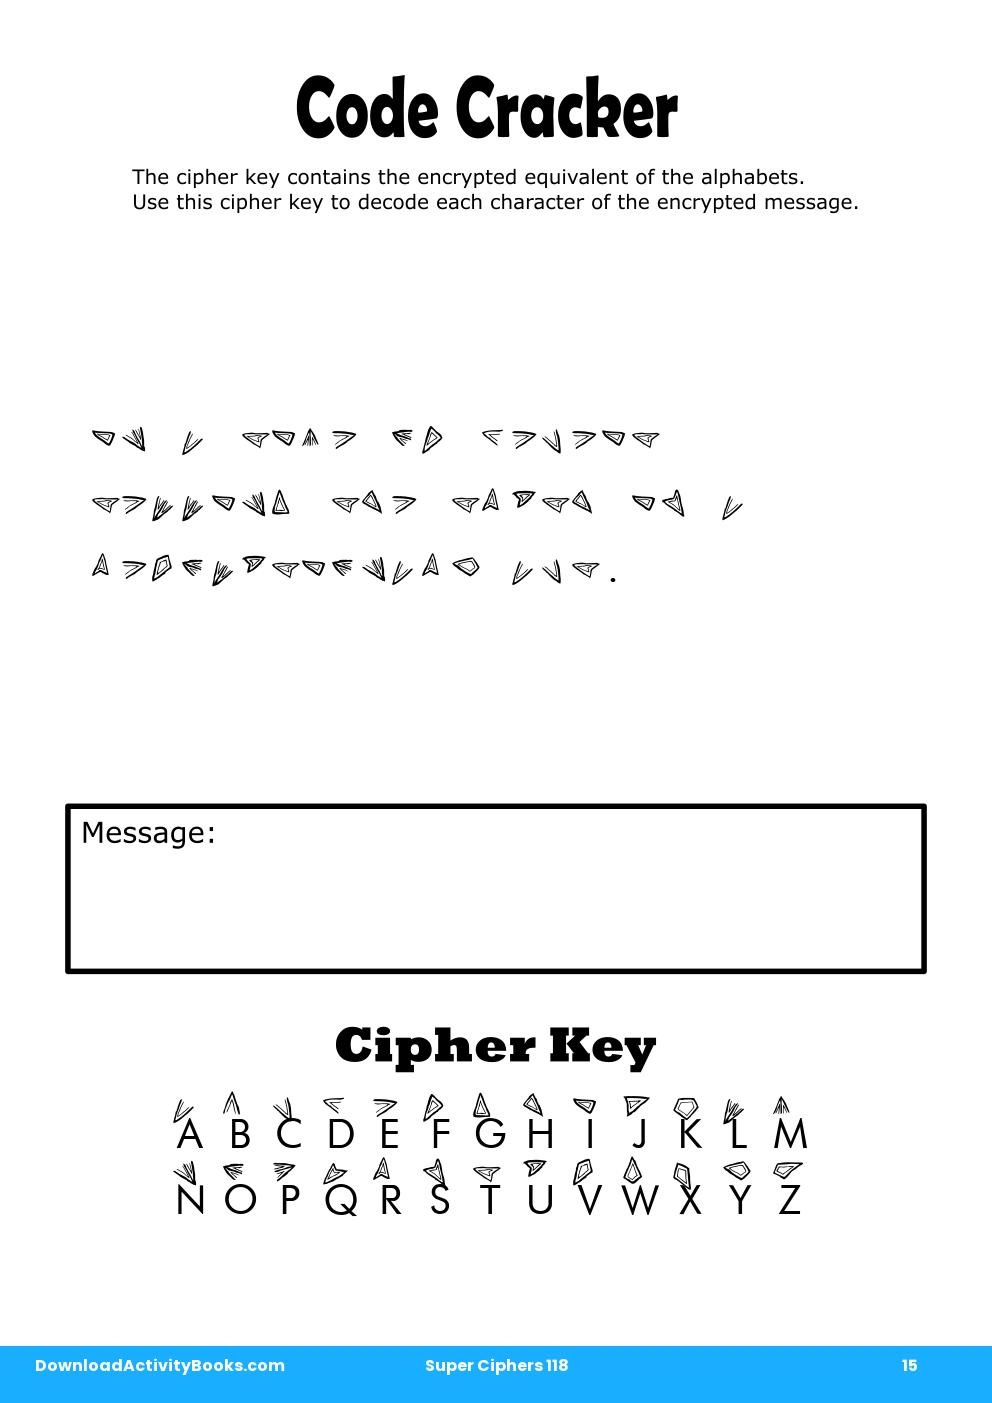 Code Cracker in Super Ciphers 118